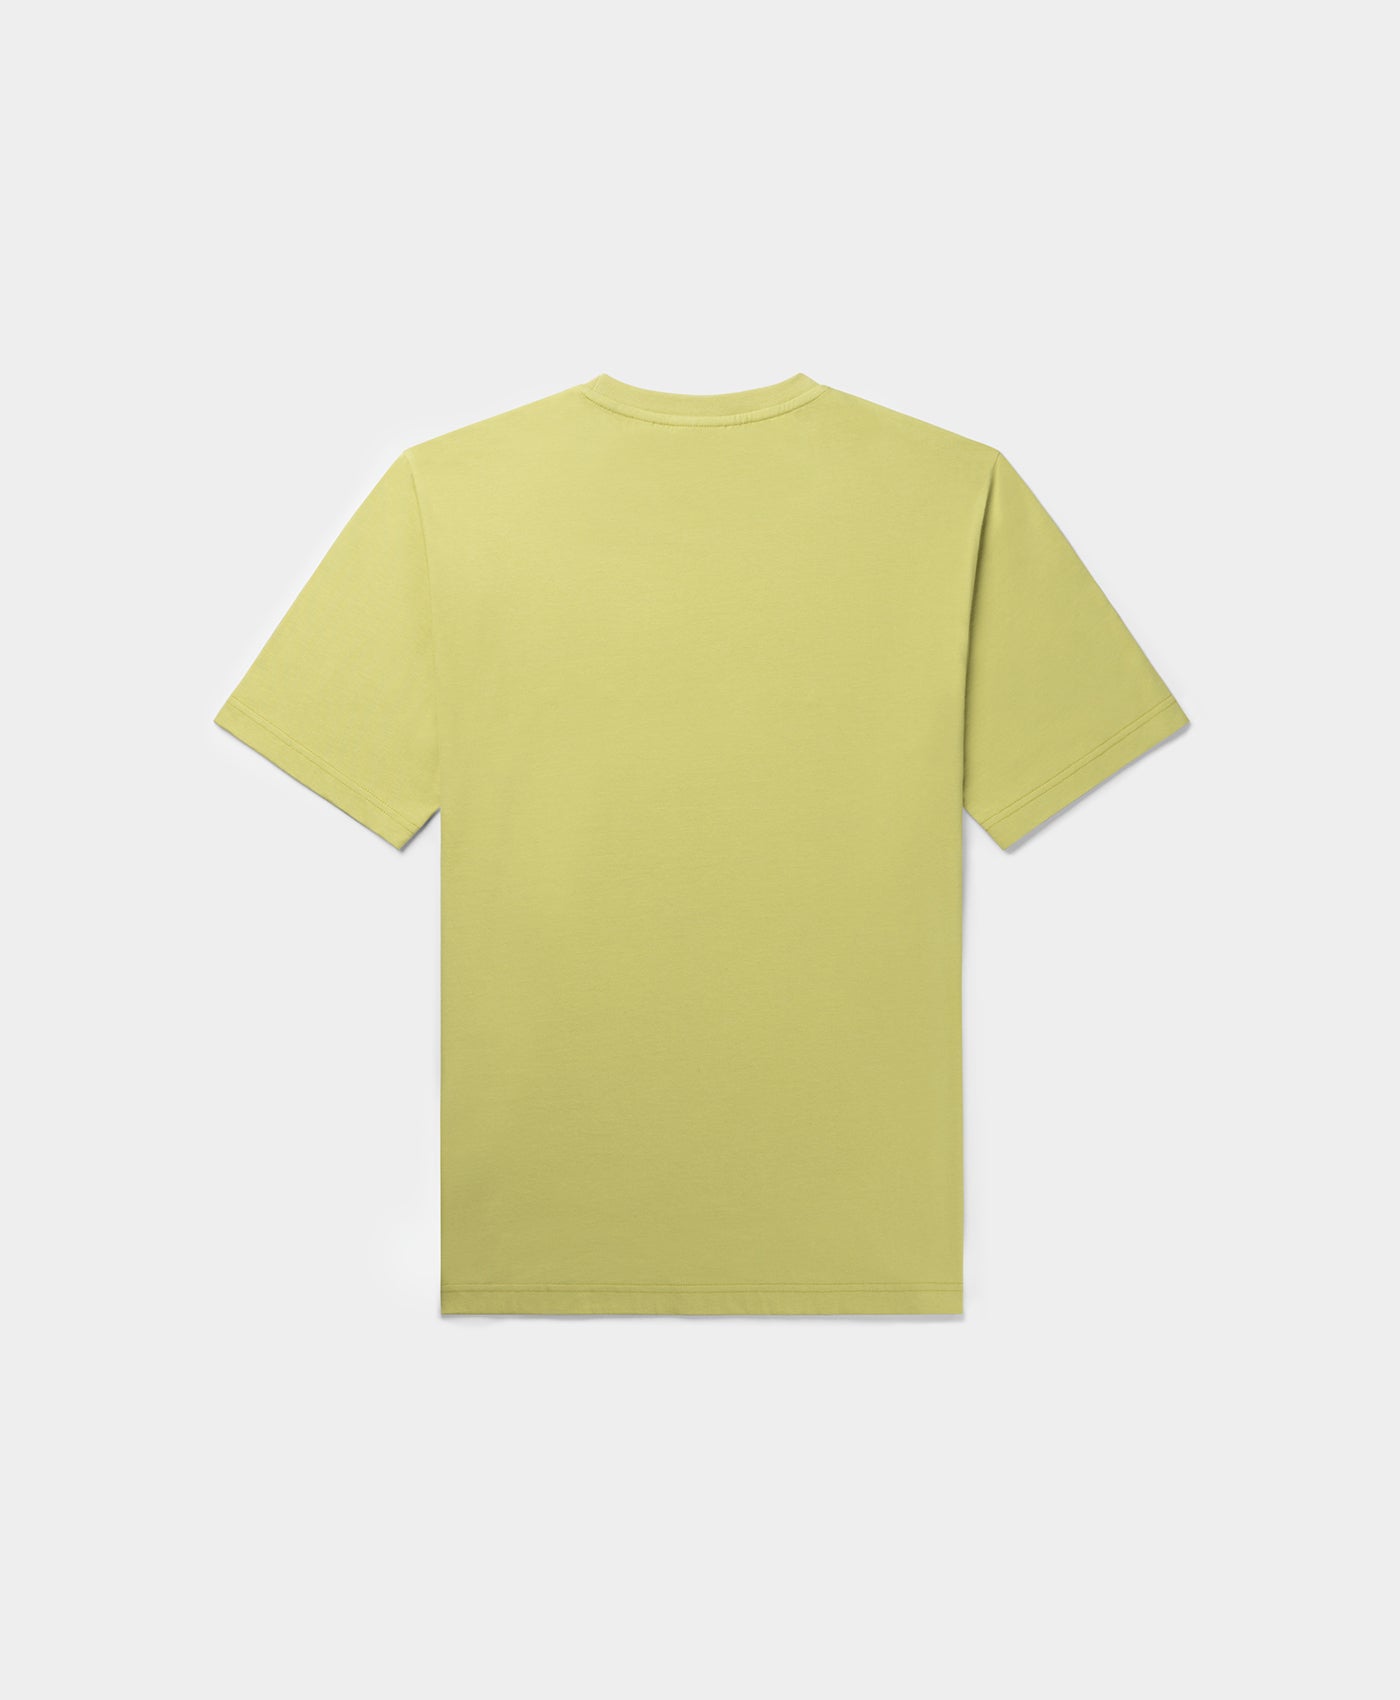 DP - Leek Green Alias T-Shirt - Packshot - Rear